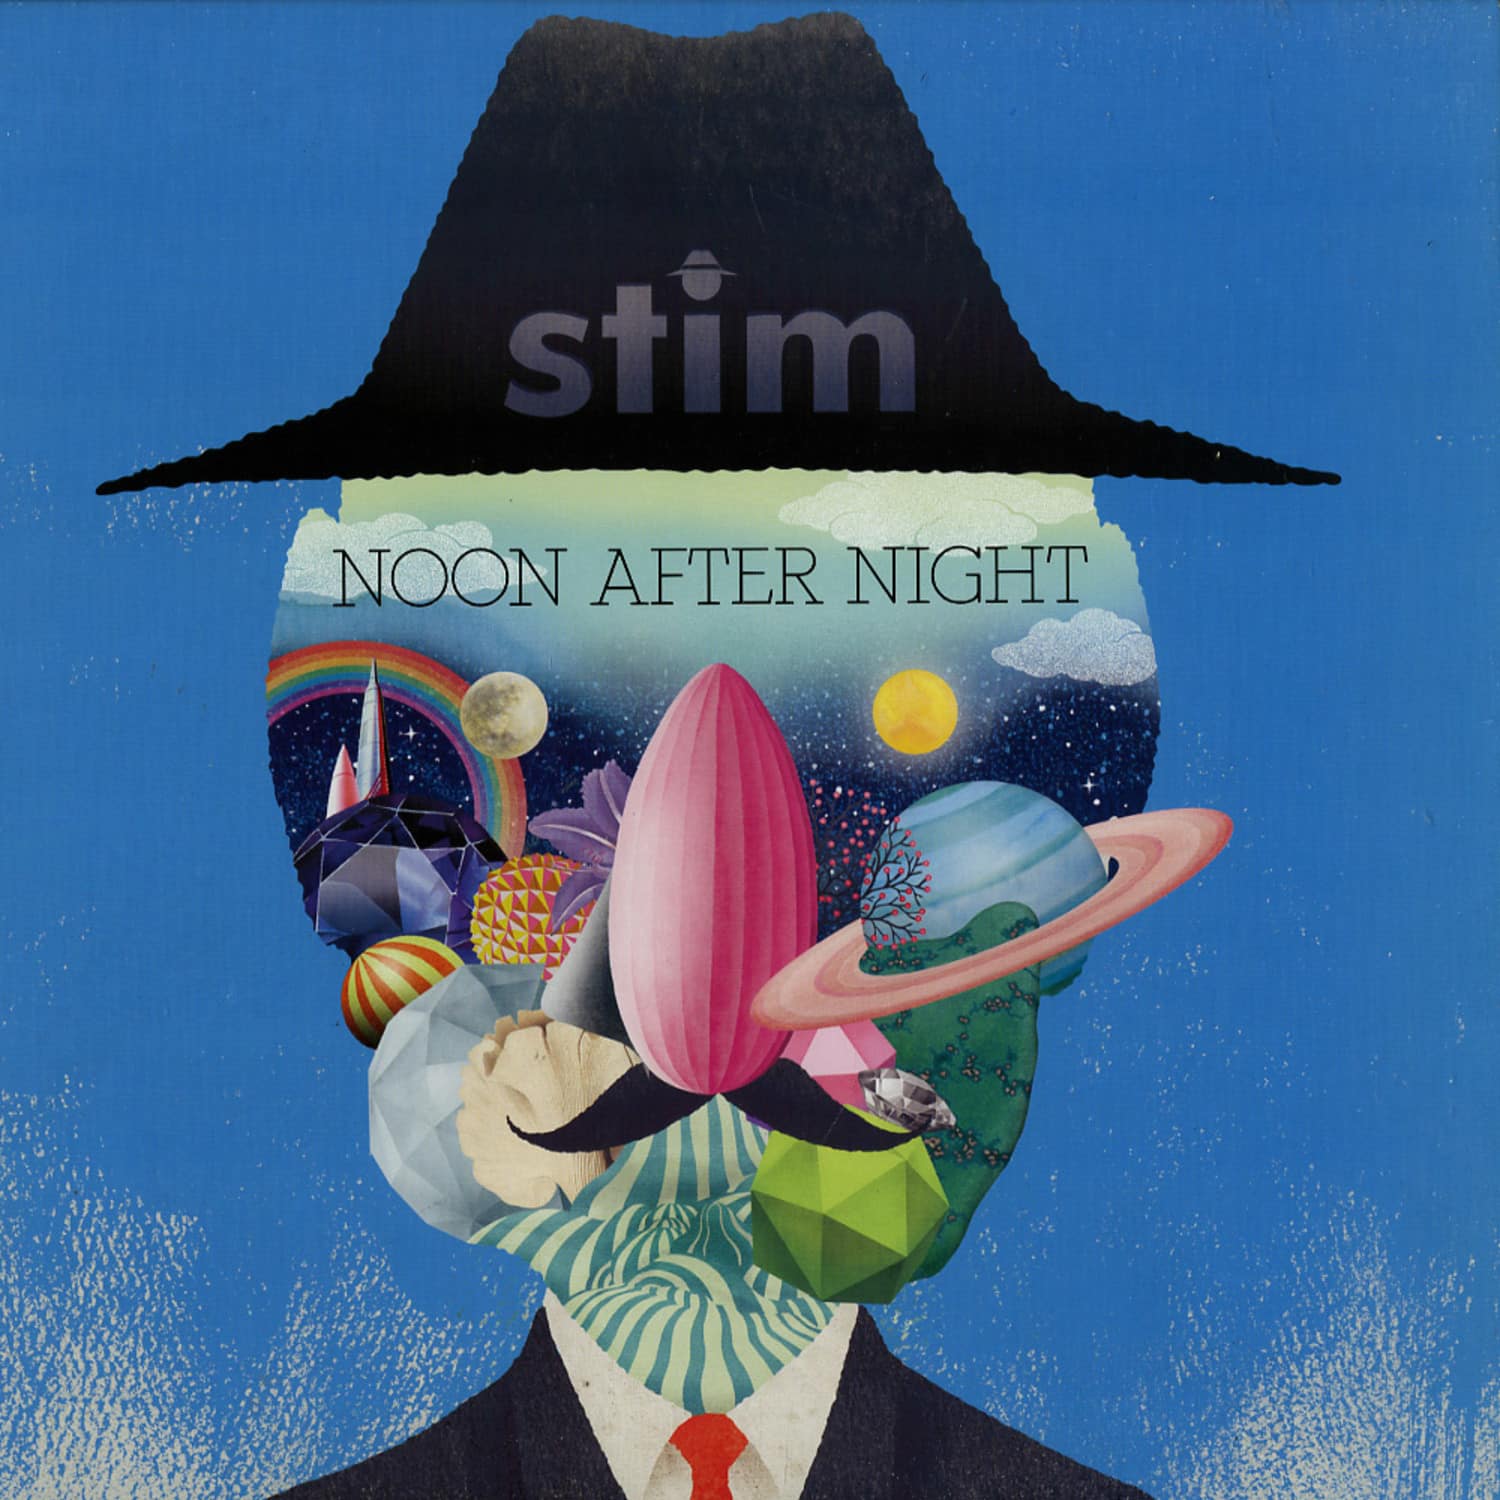 Stim - NOON AFTER NIGHT